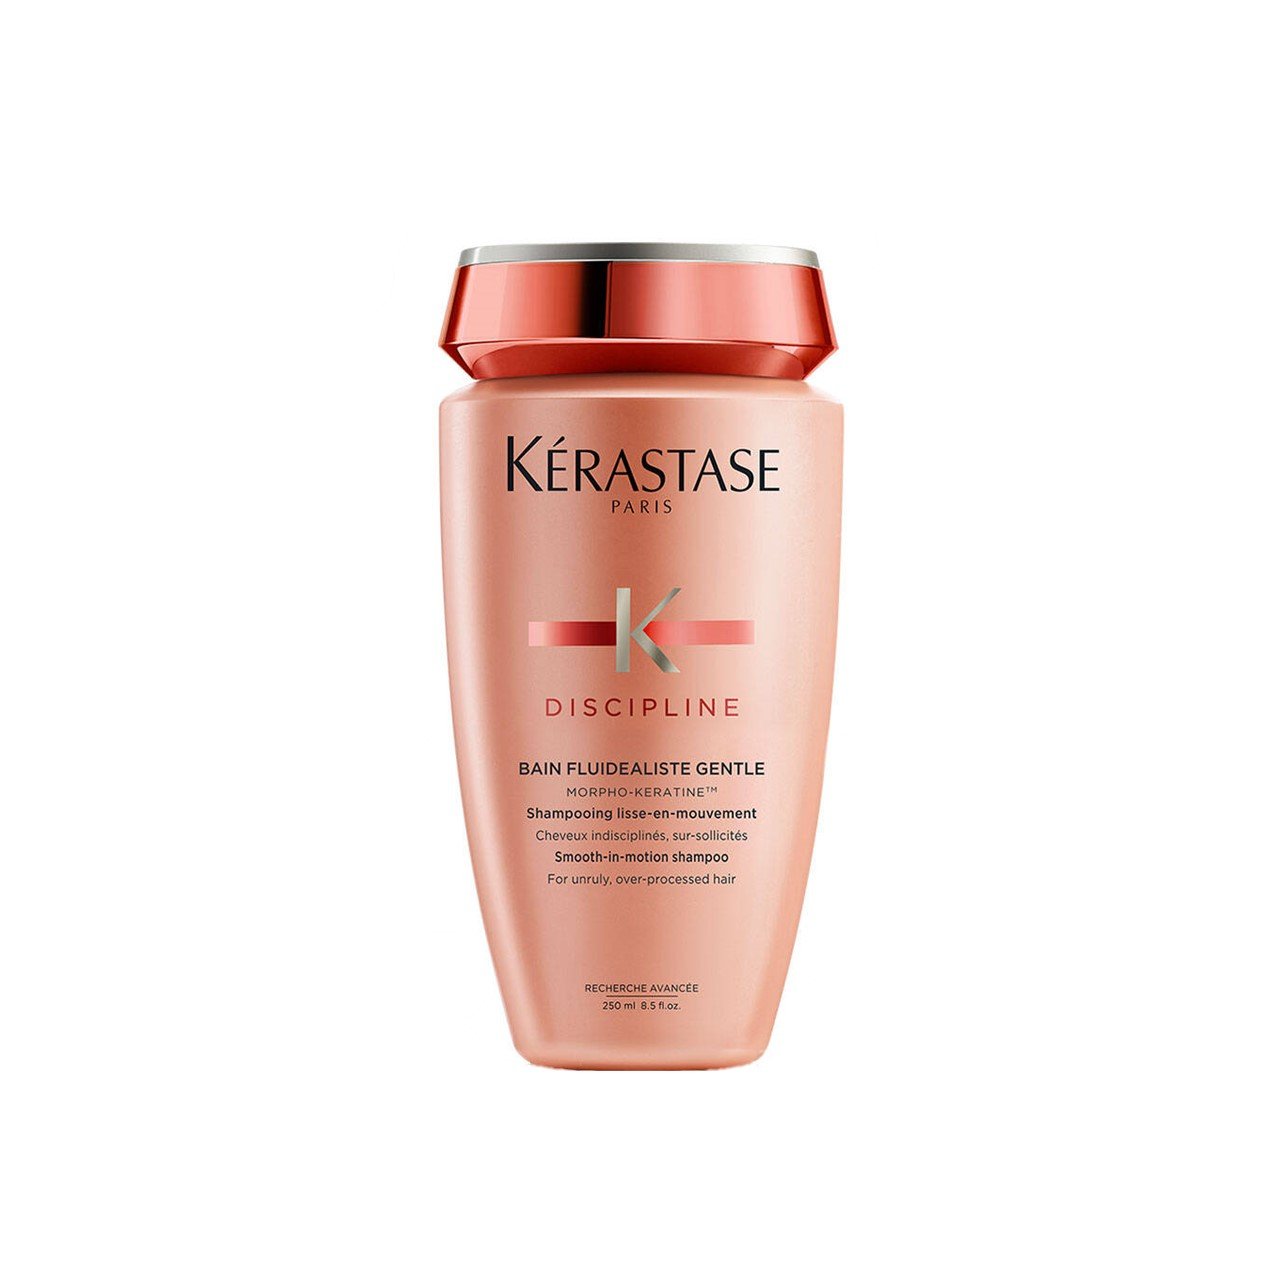 Kérastase Discipline Bain Fluidealiste Gentle Shampoo 250ml (8.45fl oz)